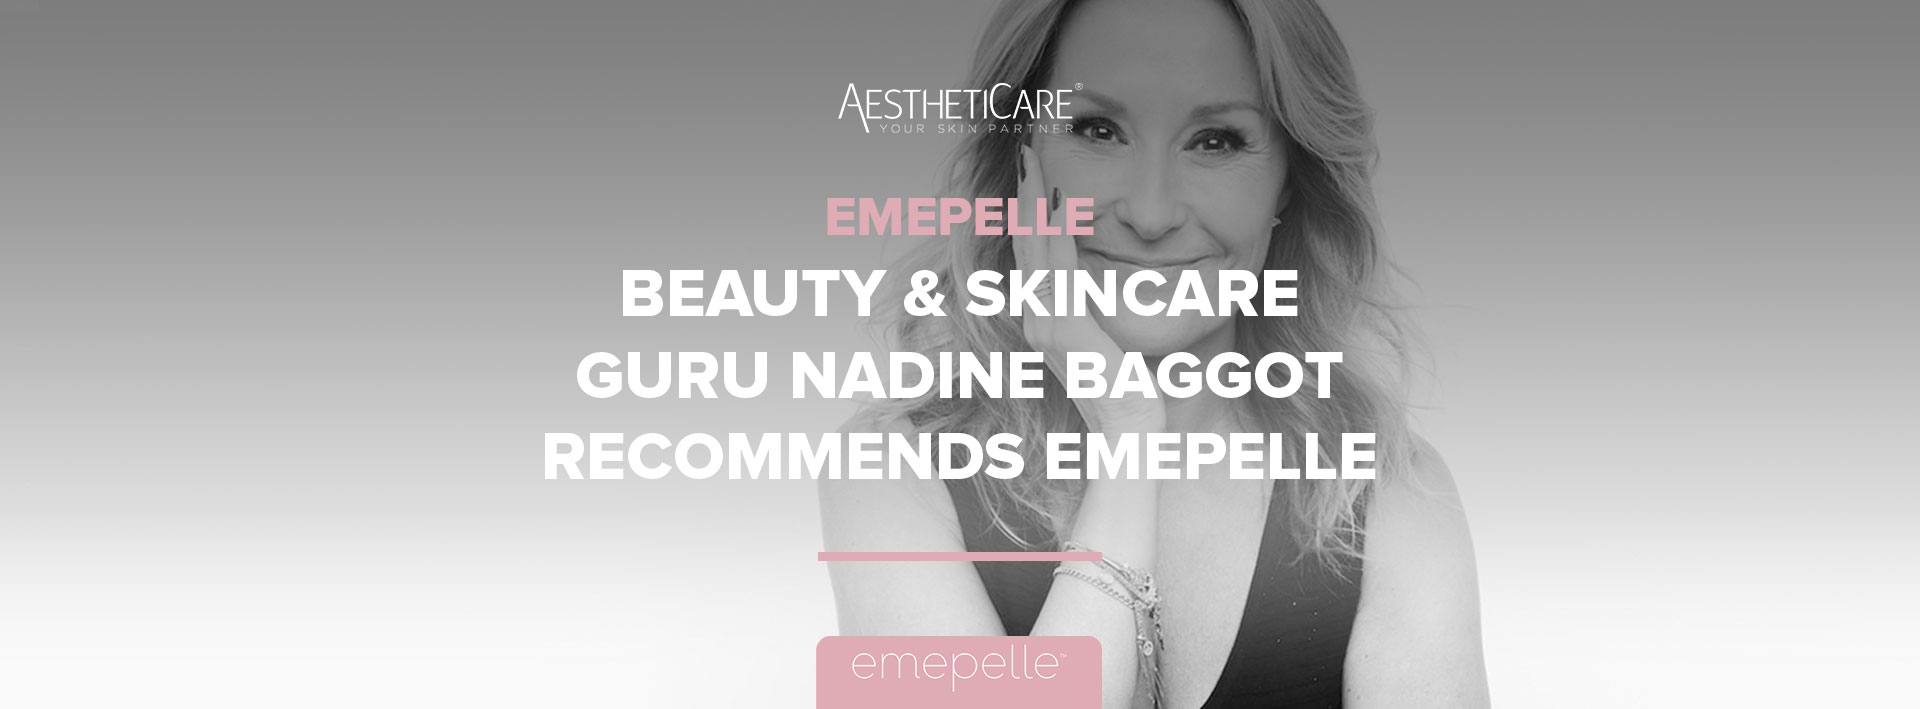 Beauty and skincare guru nadine baggot recommends emepelle - AesthetiCare